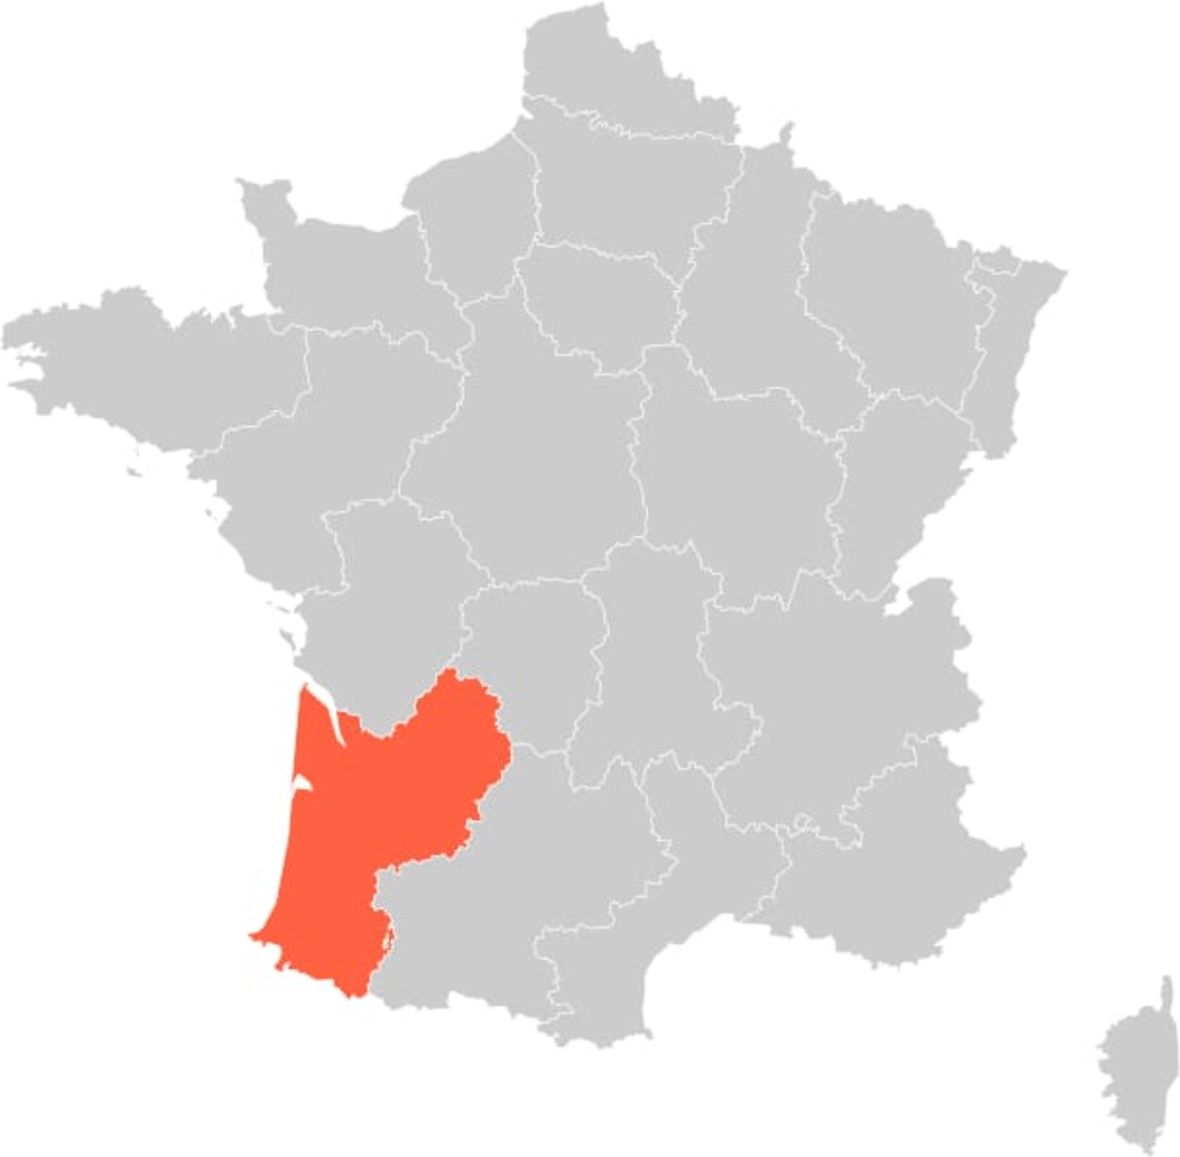 France Bordeaux and Dordogne Region Map